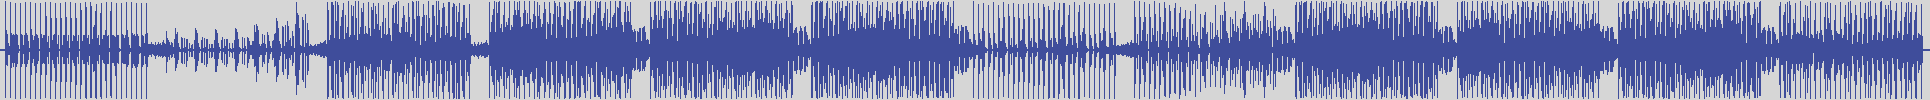 nf_boyz_records [NFY064] Mangrovia - Prohibited [Black Jag V6 Mix] audio wave form